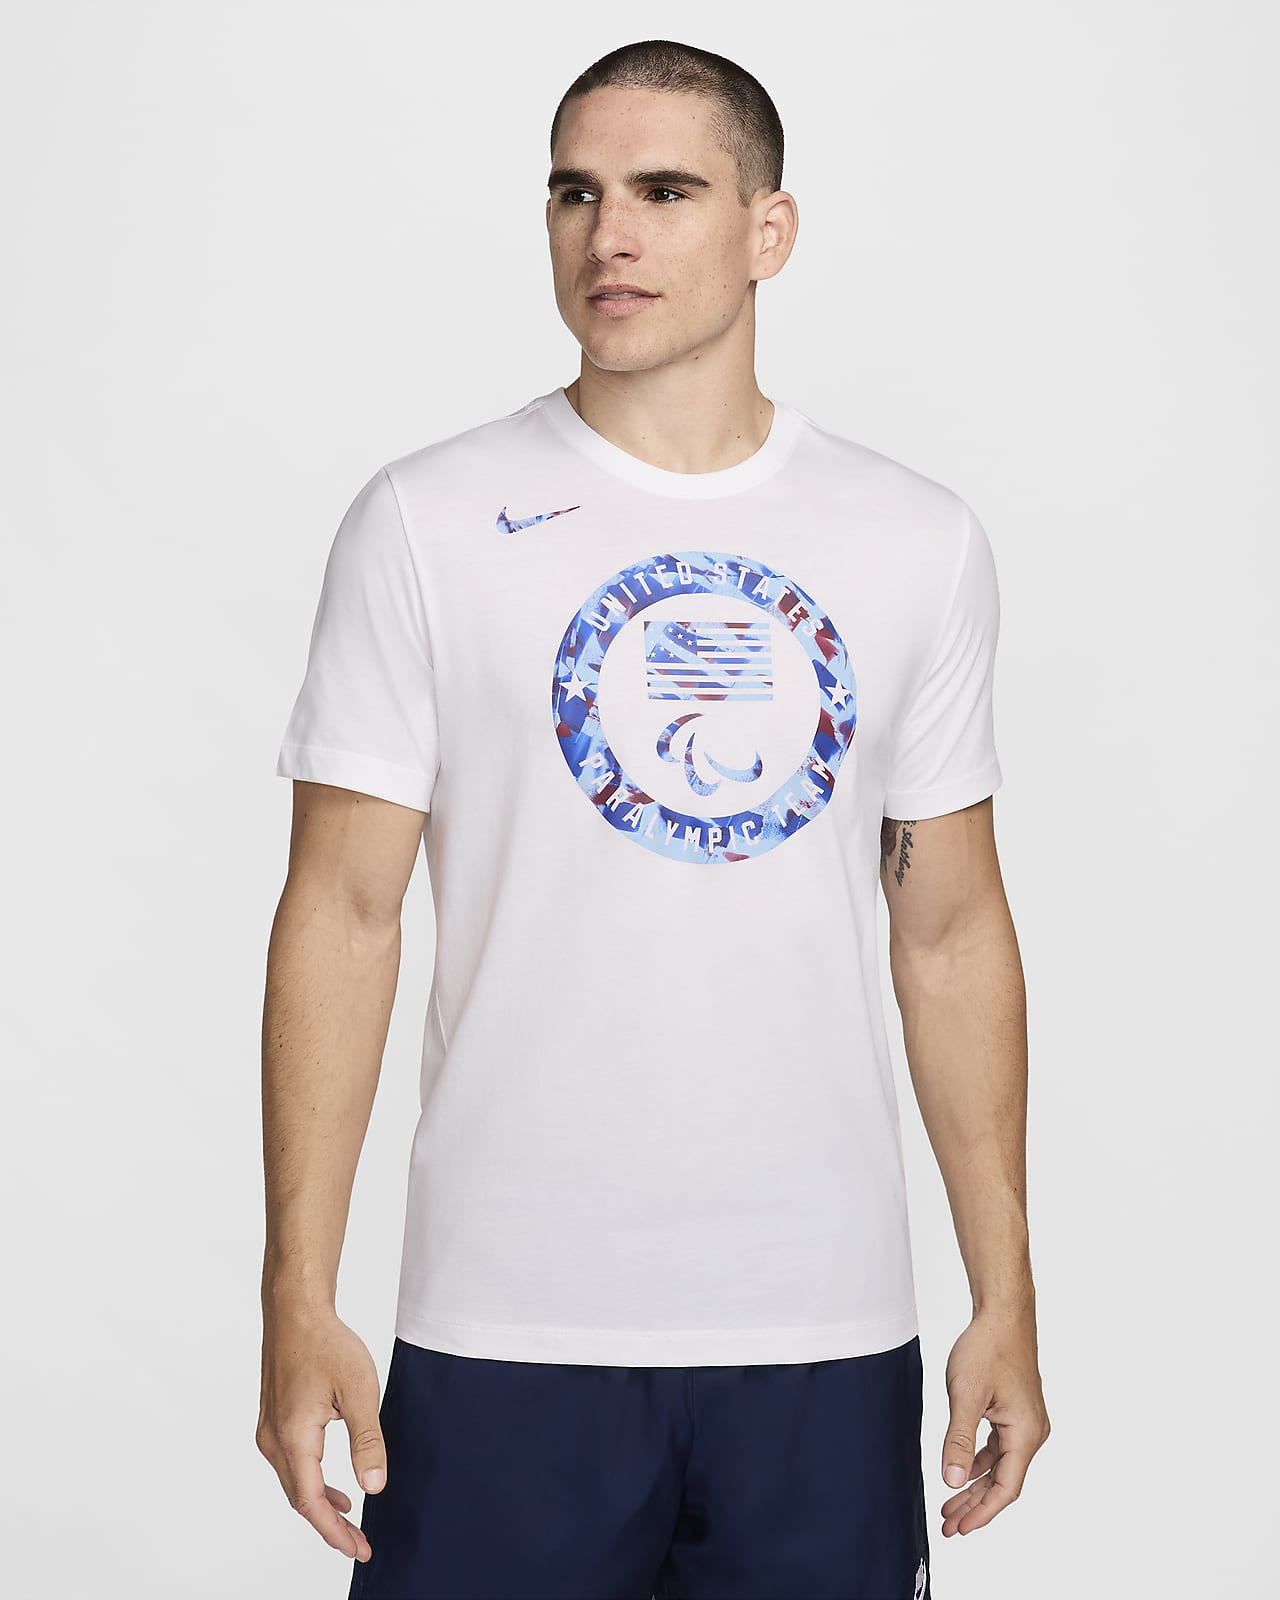 Team USA Club Men's Nike T-Shirt